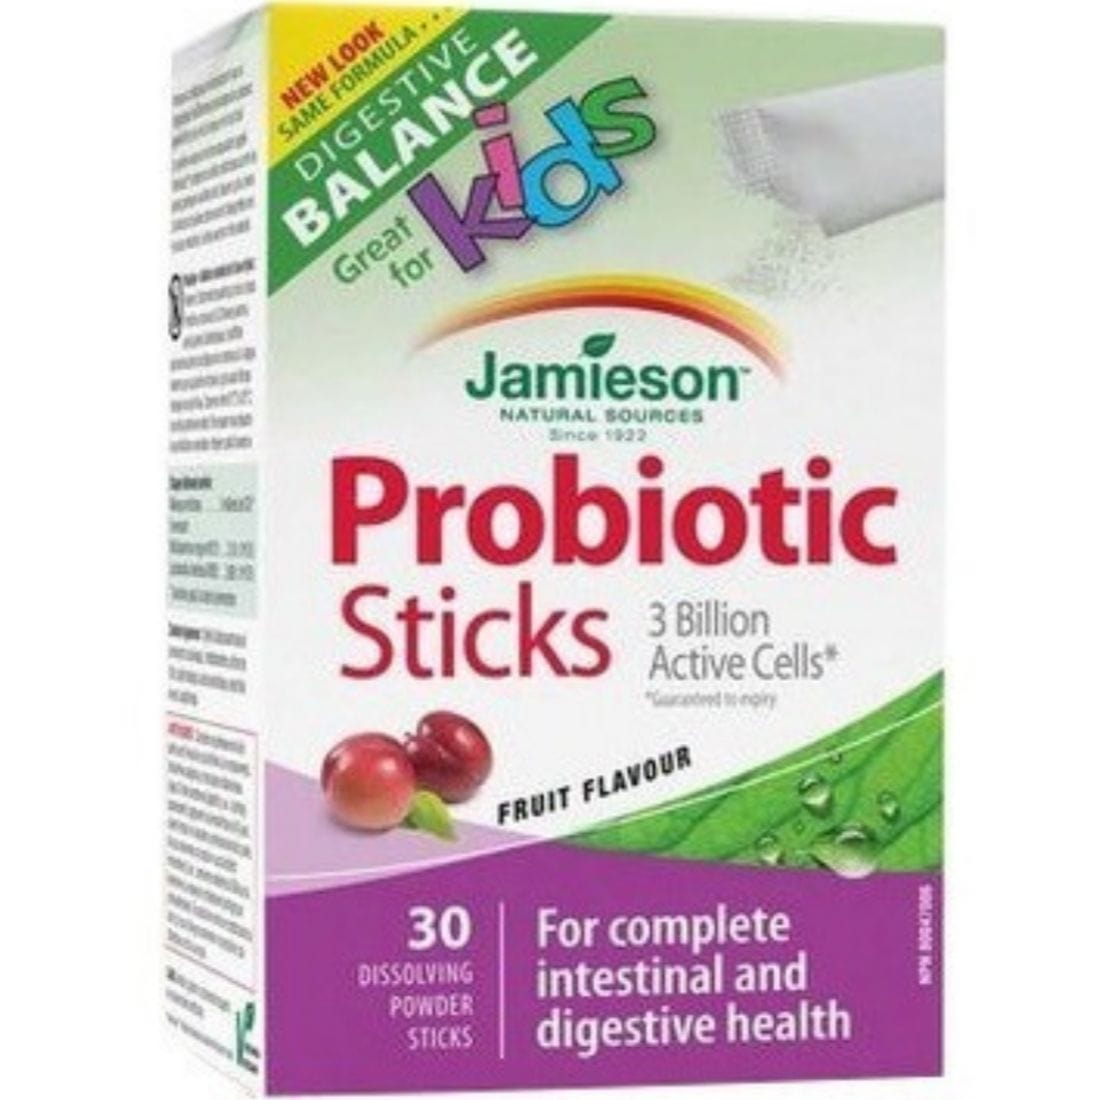 Jamieson Probiotic Kids Sticks 3 Billion (Fruit Flavour), 30 Dissolving Powder Sticks